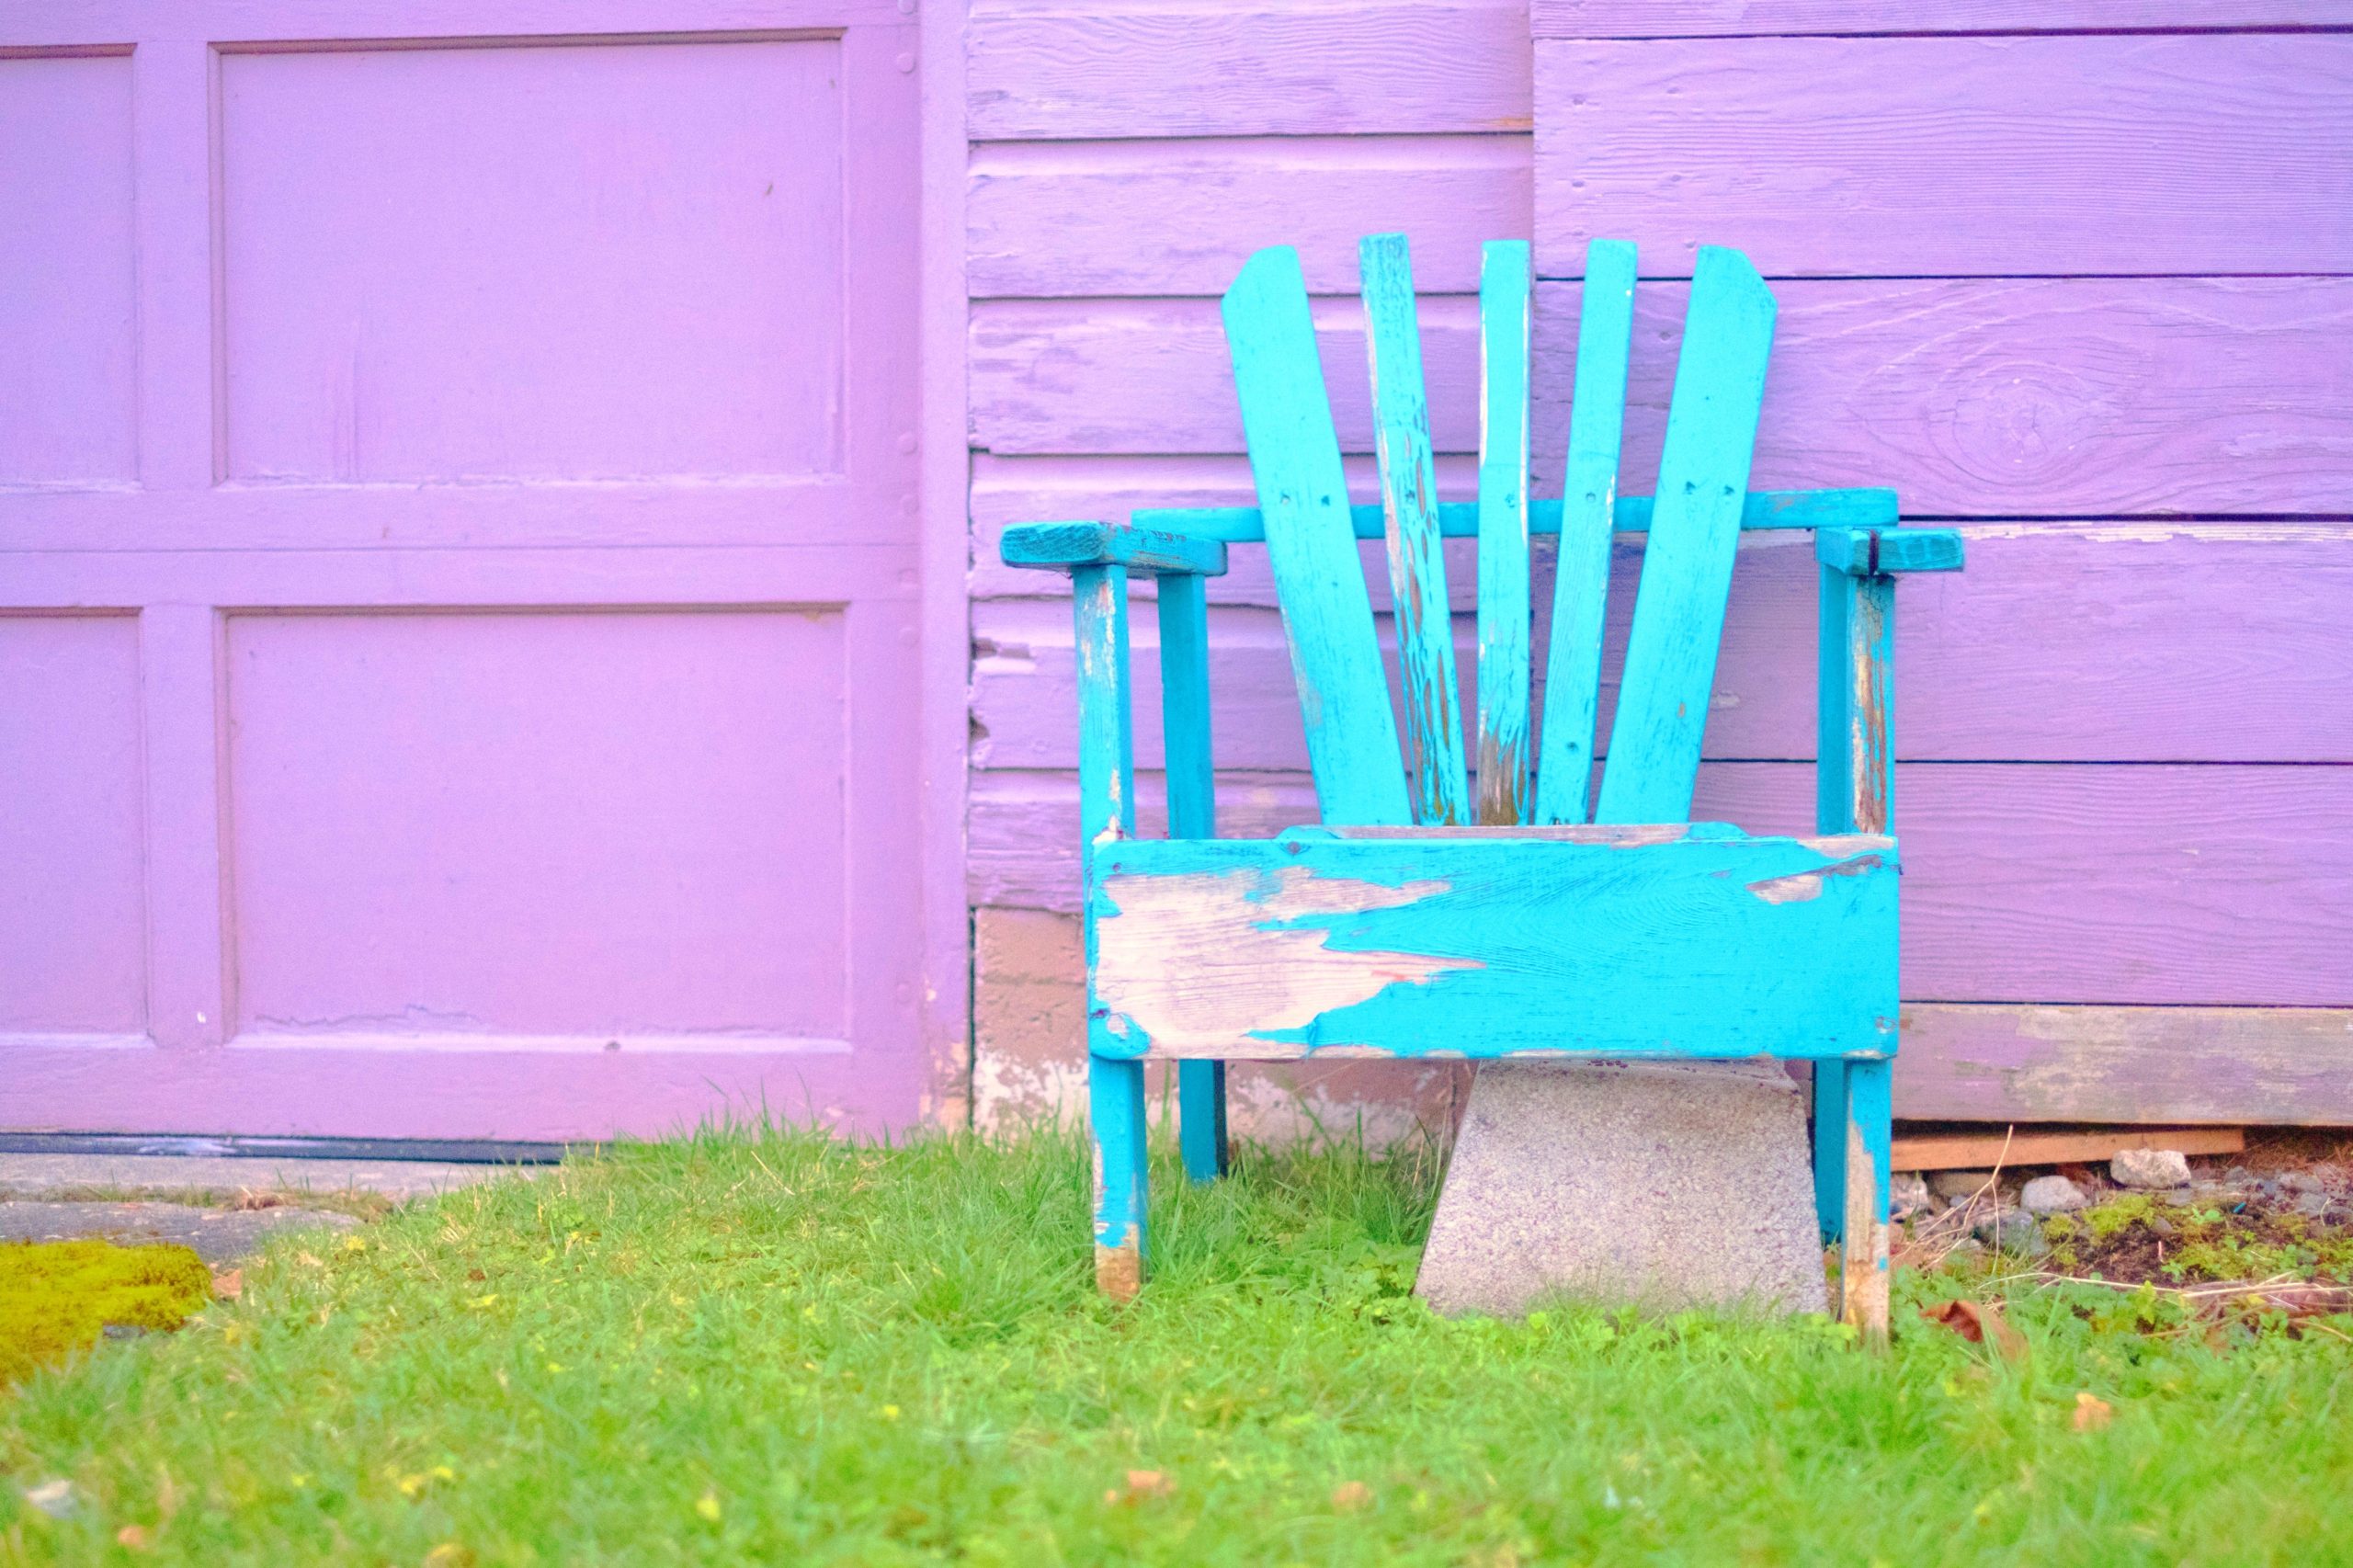 <img src="blue.jpg" alt="blue chair against purple house"/> 